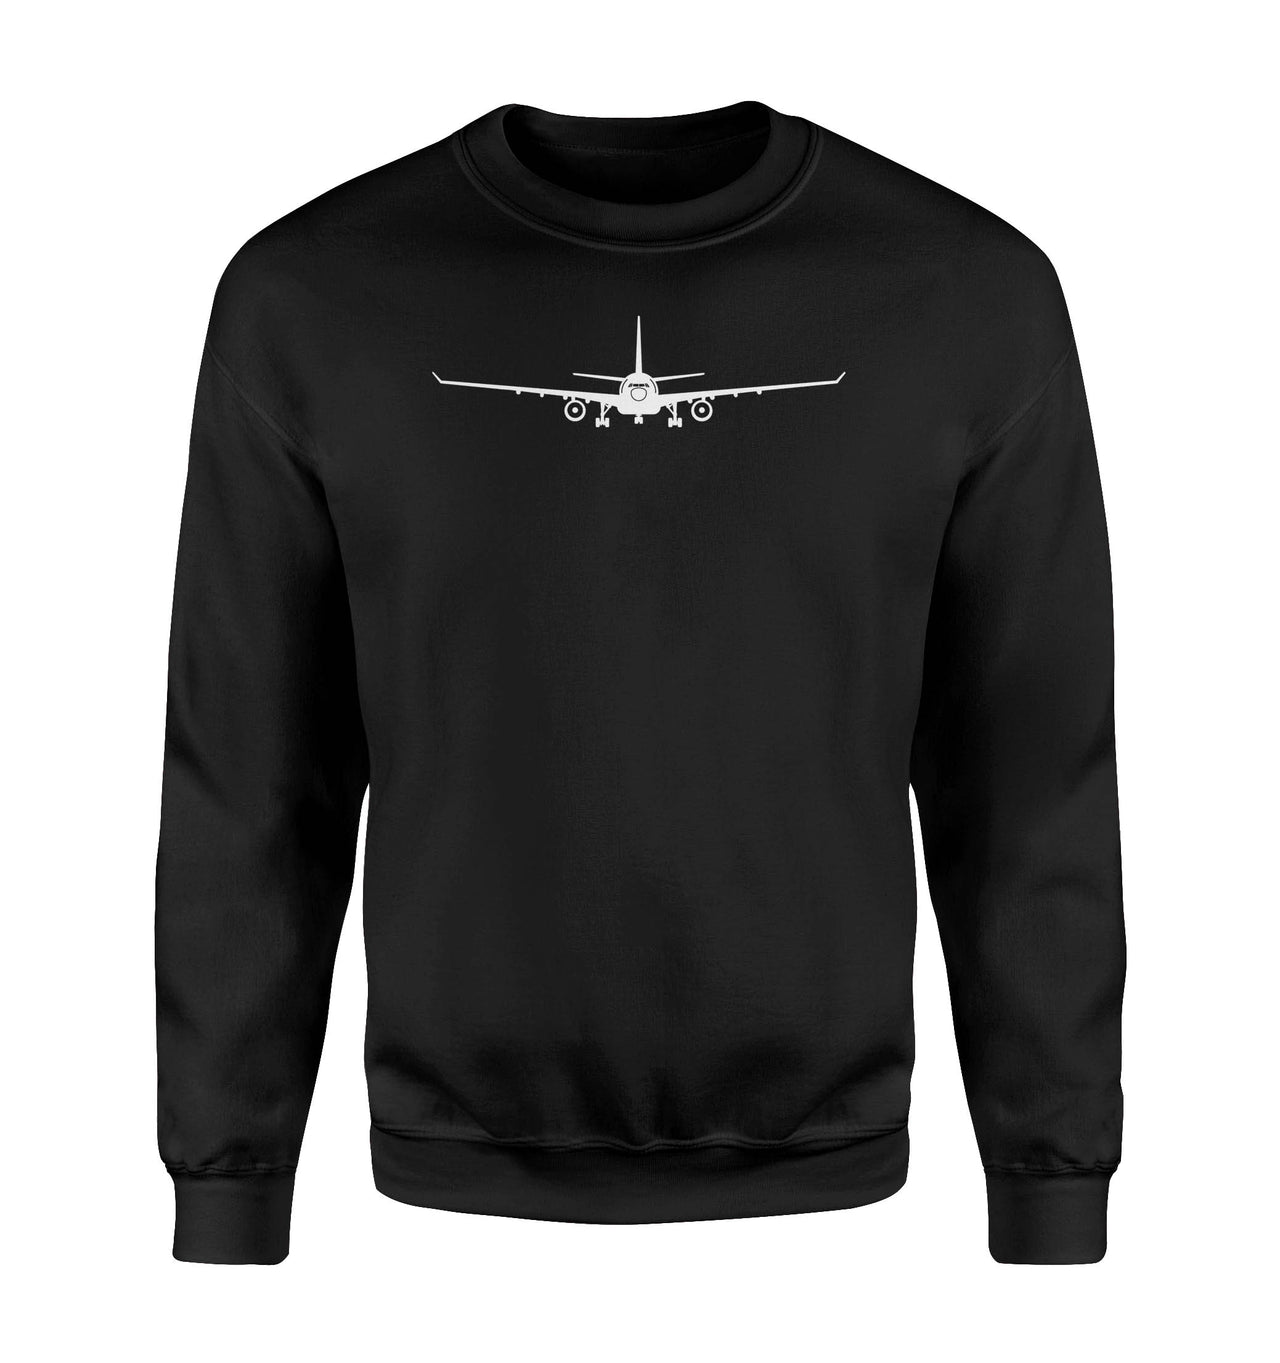 Airbus A330 Silhouette Designed Sweatshirts